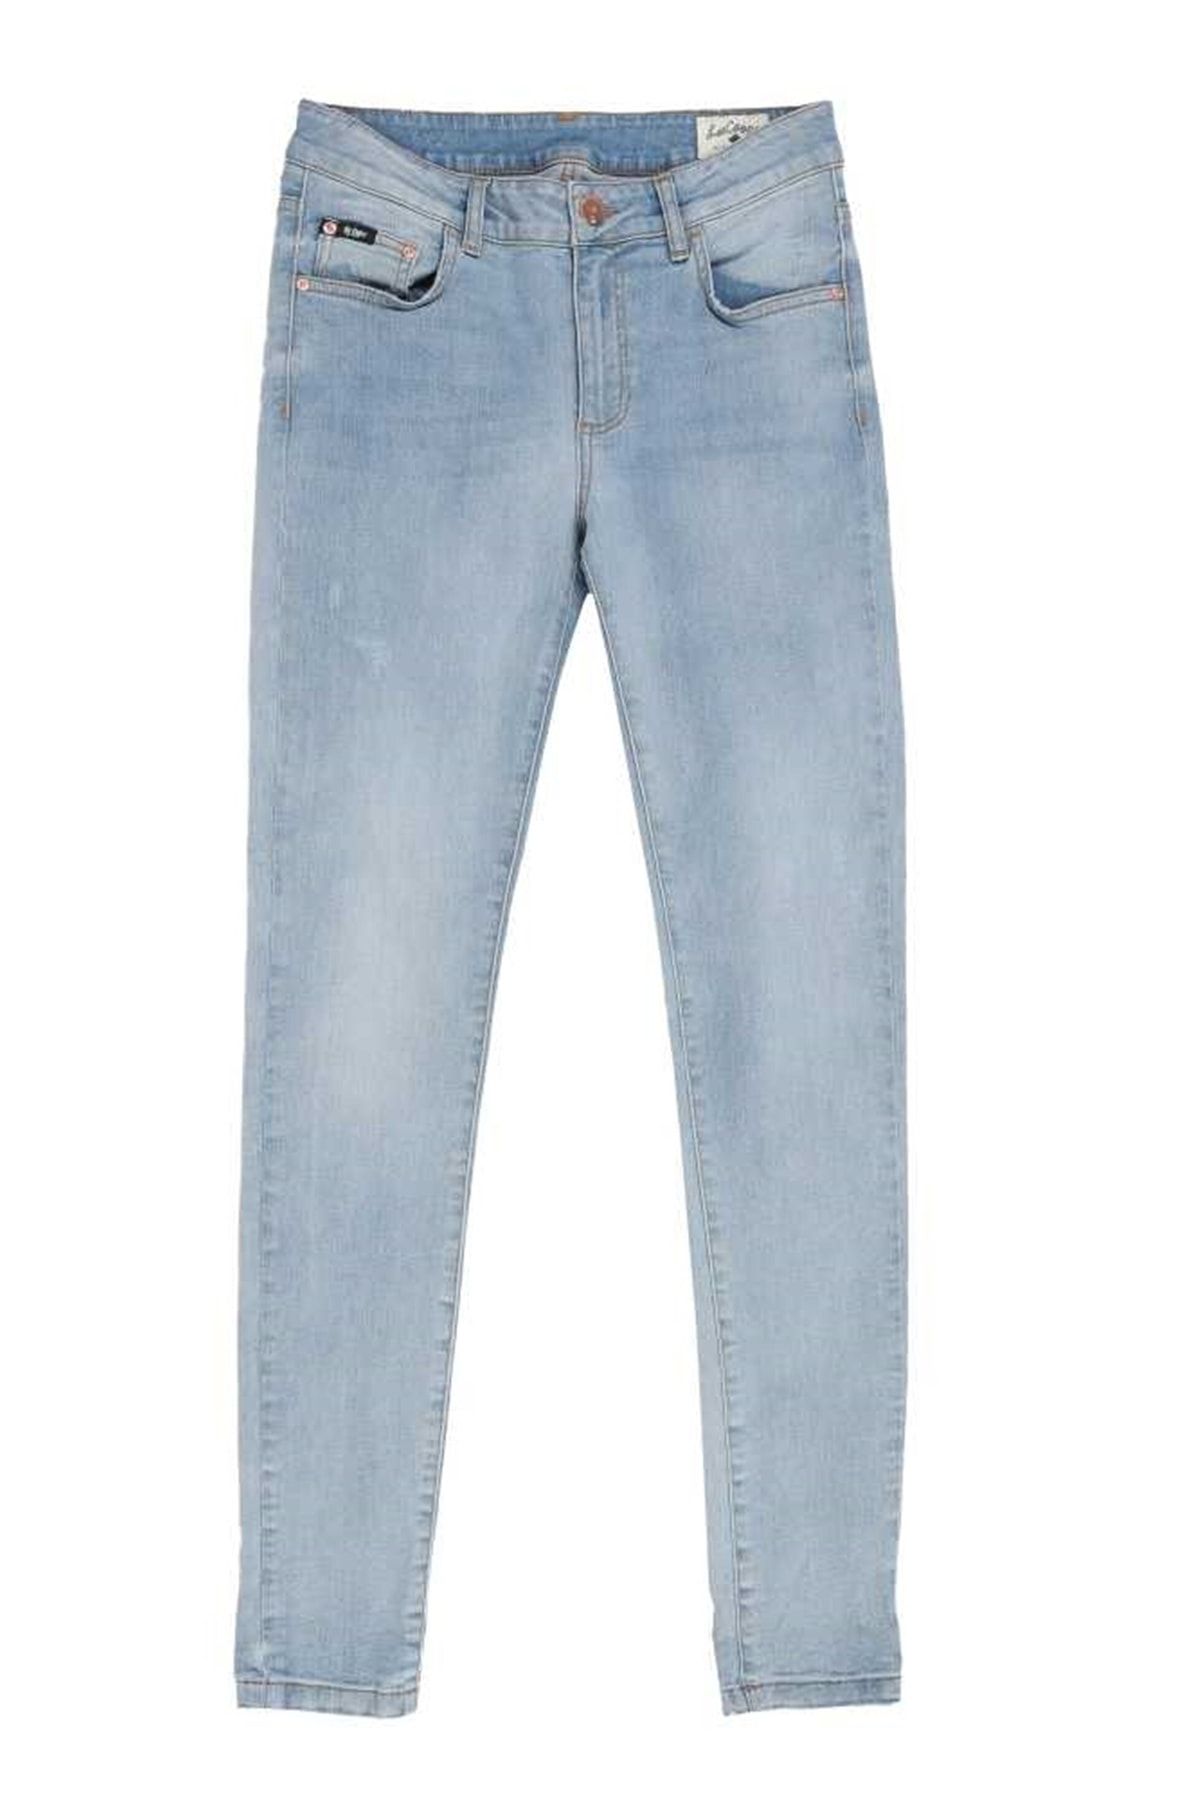 Lee Cooper Amy Kadın Skinny Midrise Fit Jean Pantolon Gots Light Blue